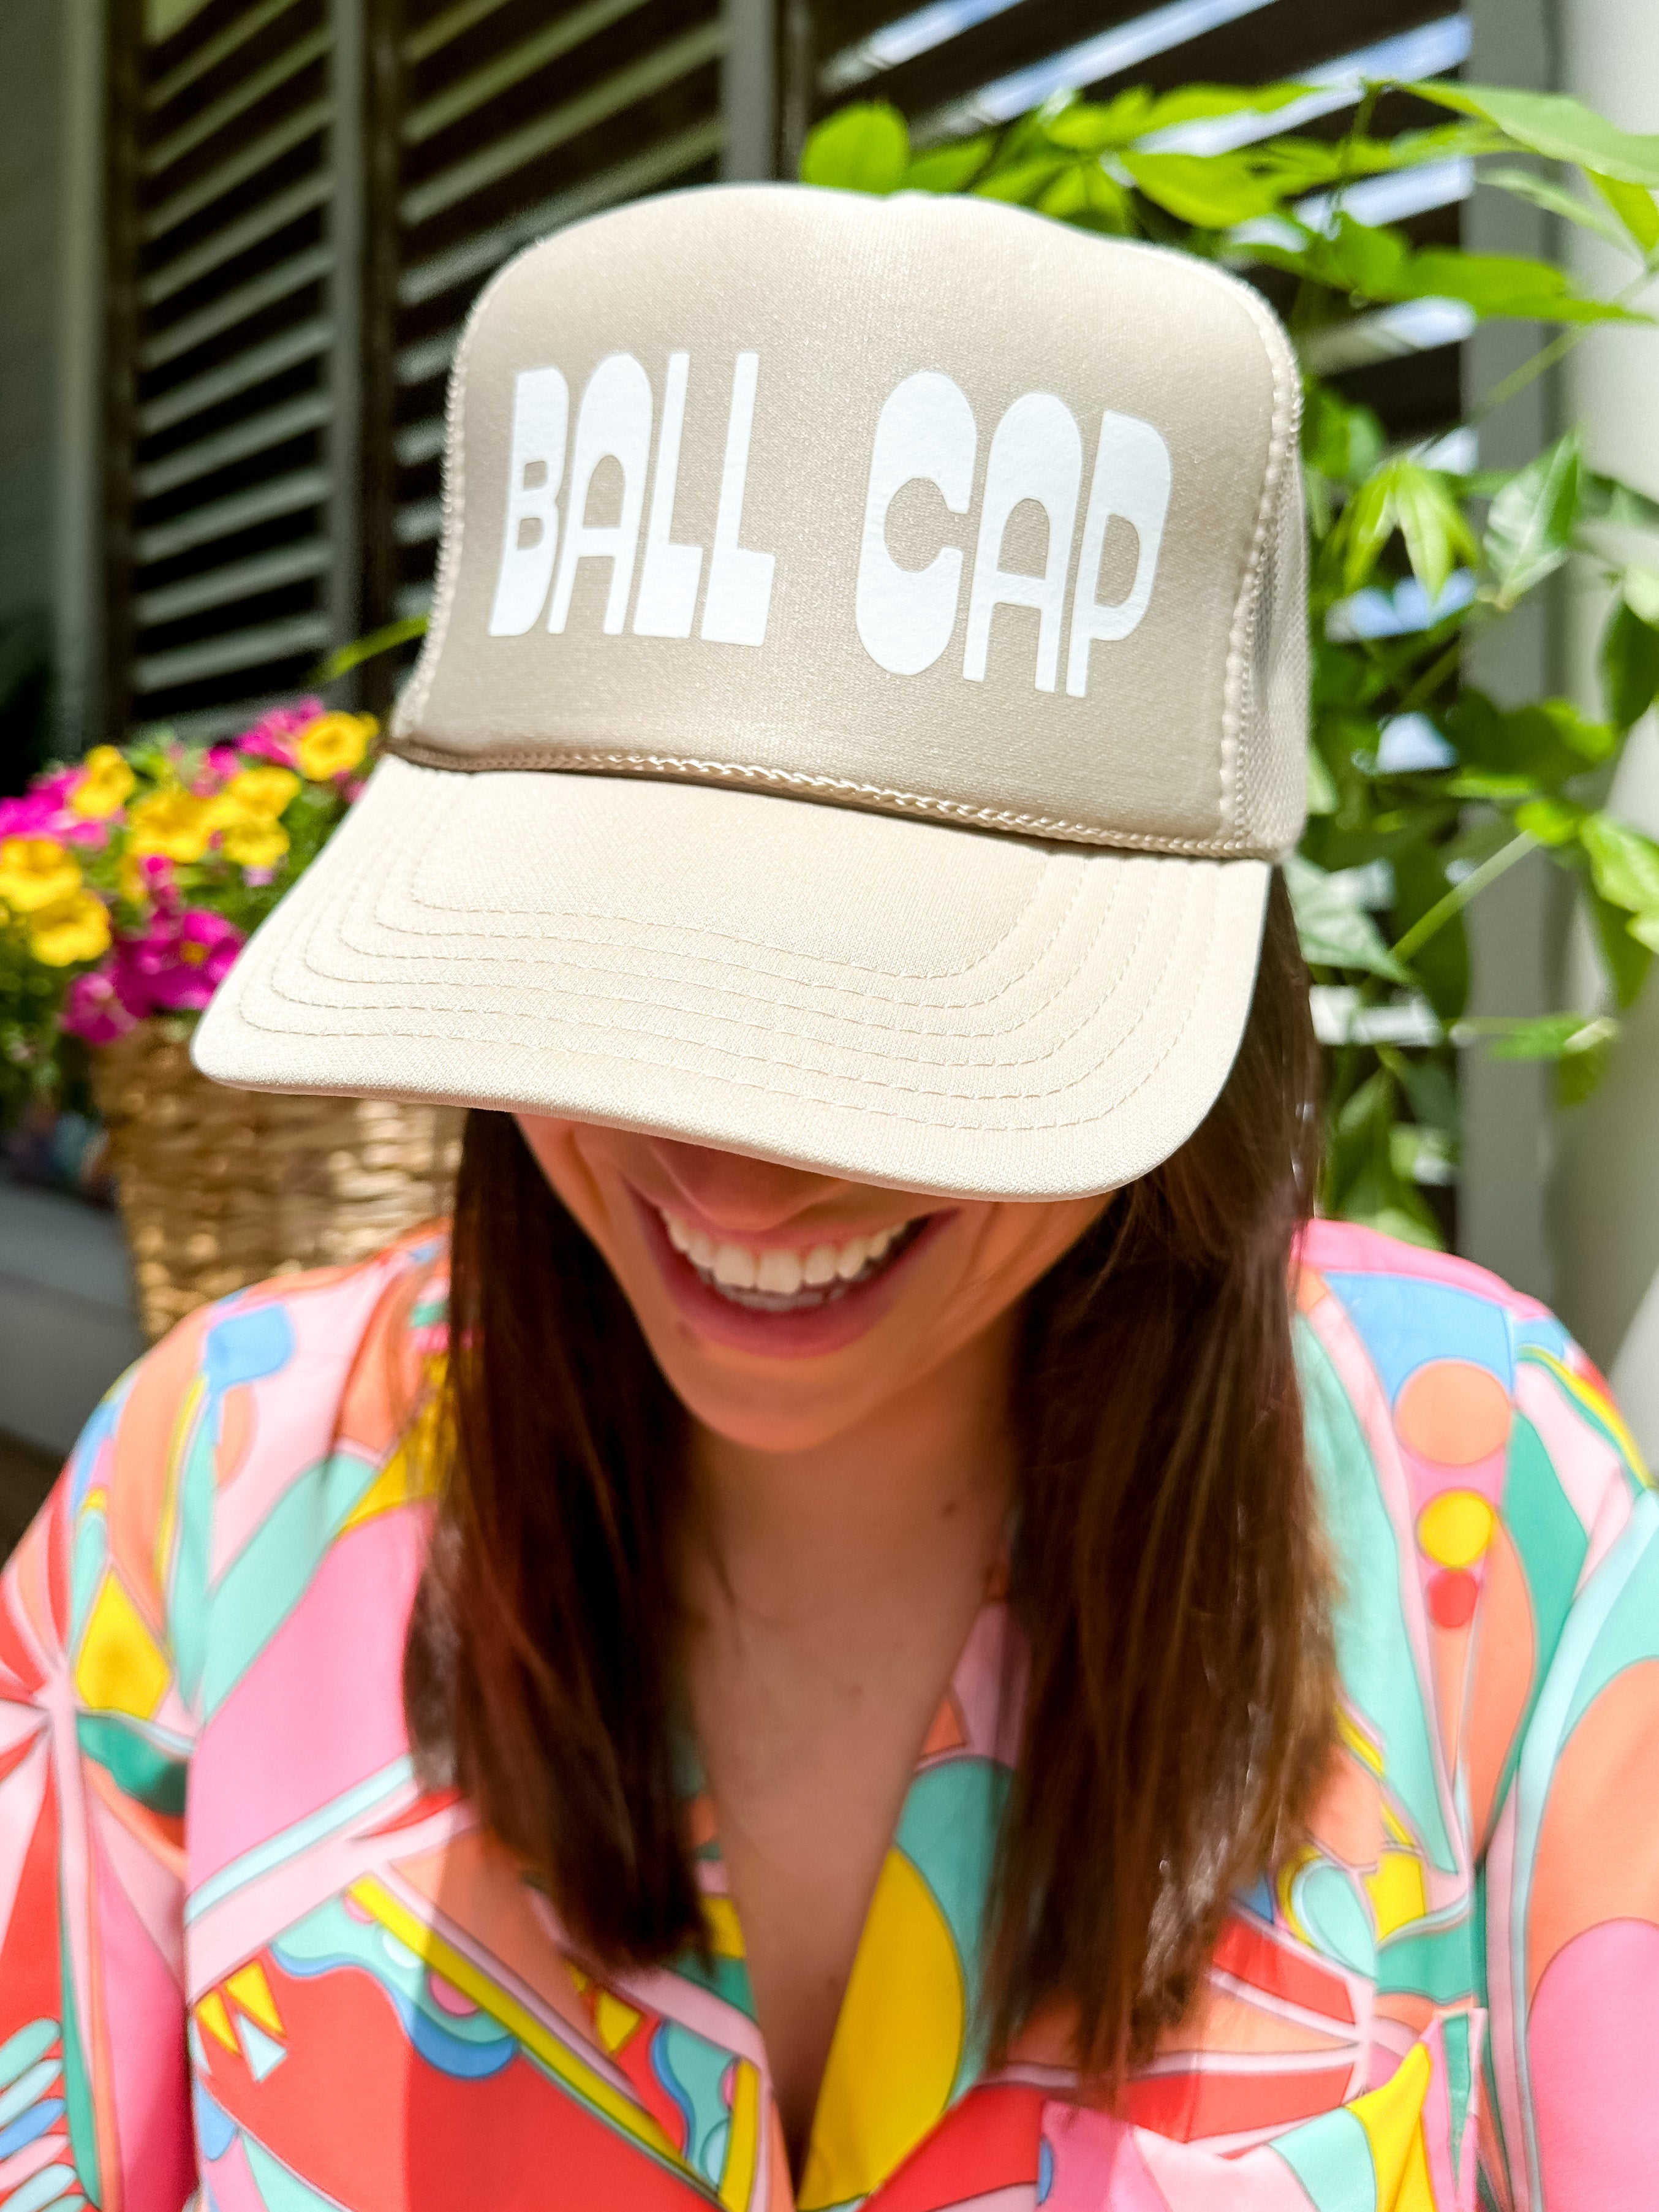 Ball Cap Cap